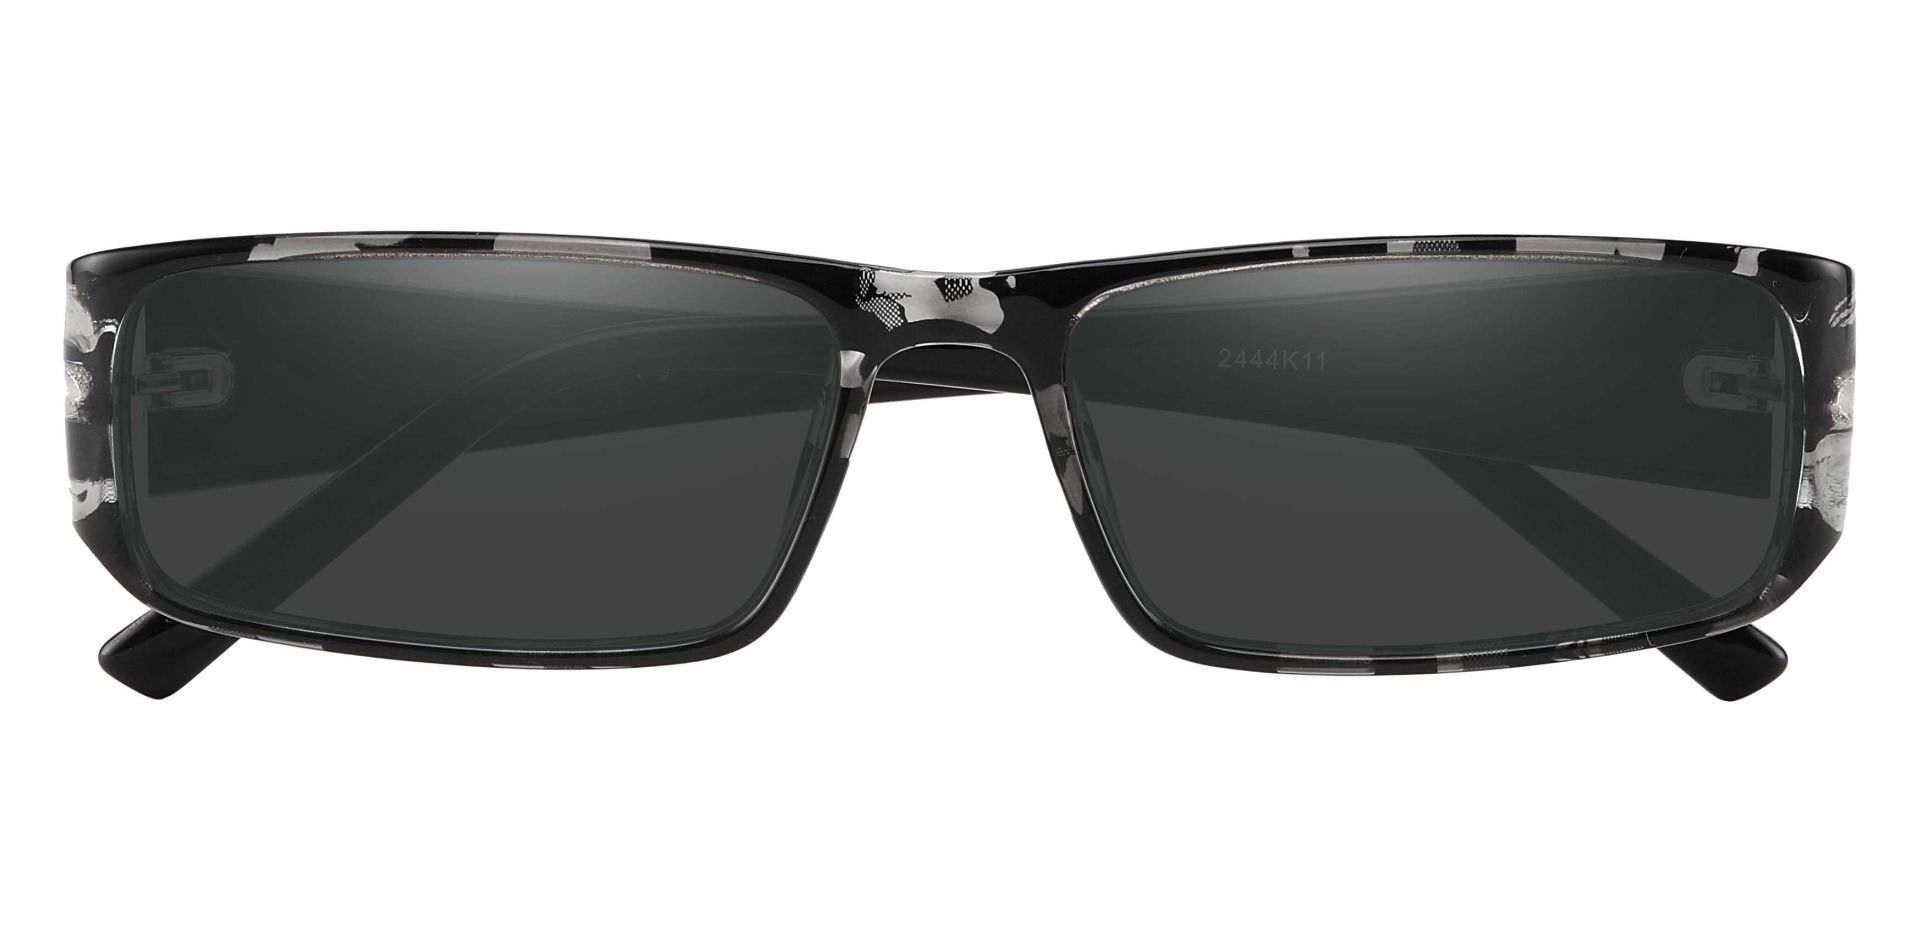 Elbert Rectangle Non-Rx Sunglasses - Black Frame With Gray Lenses